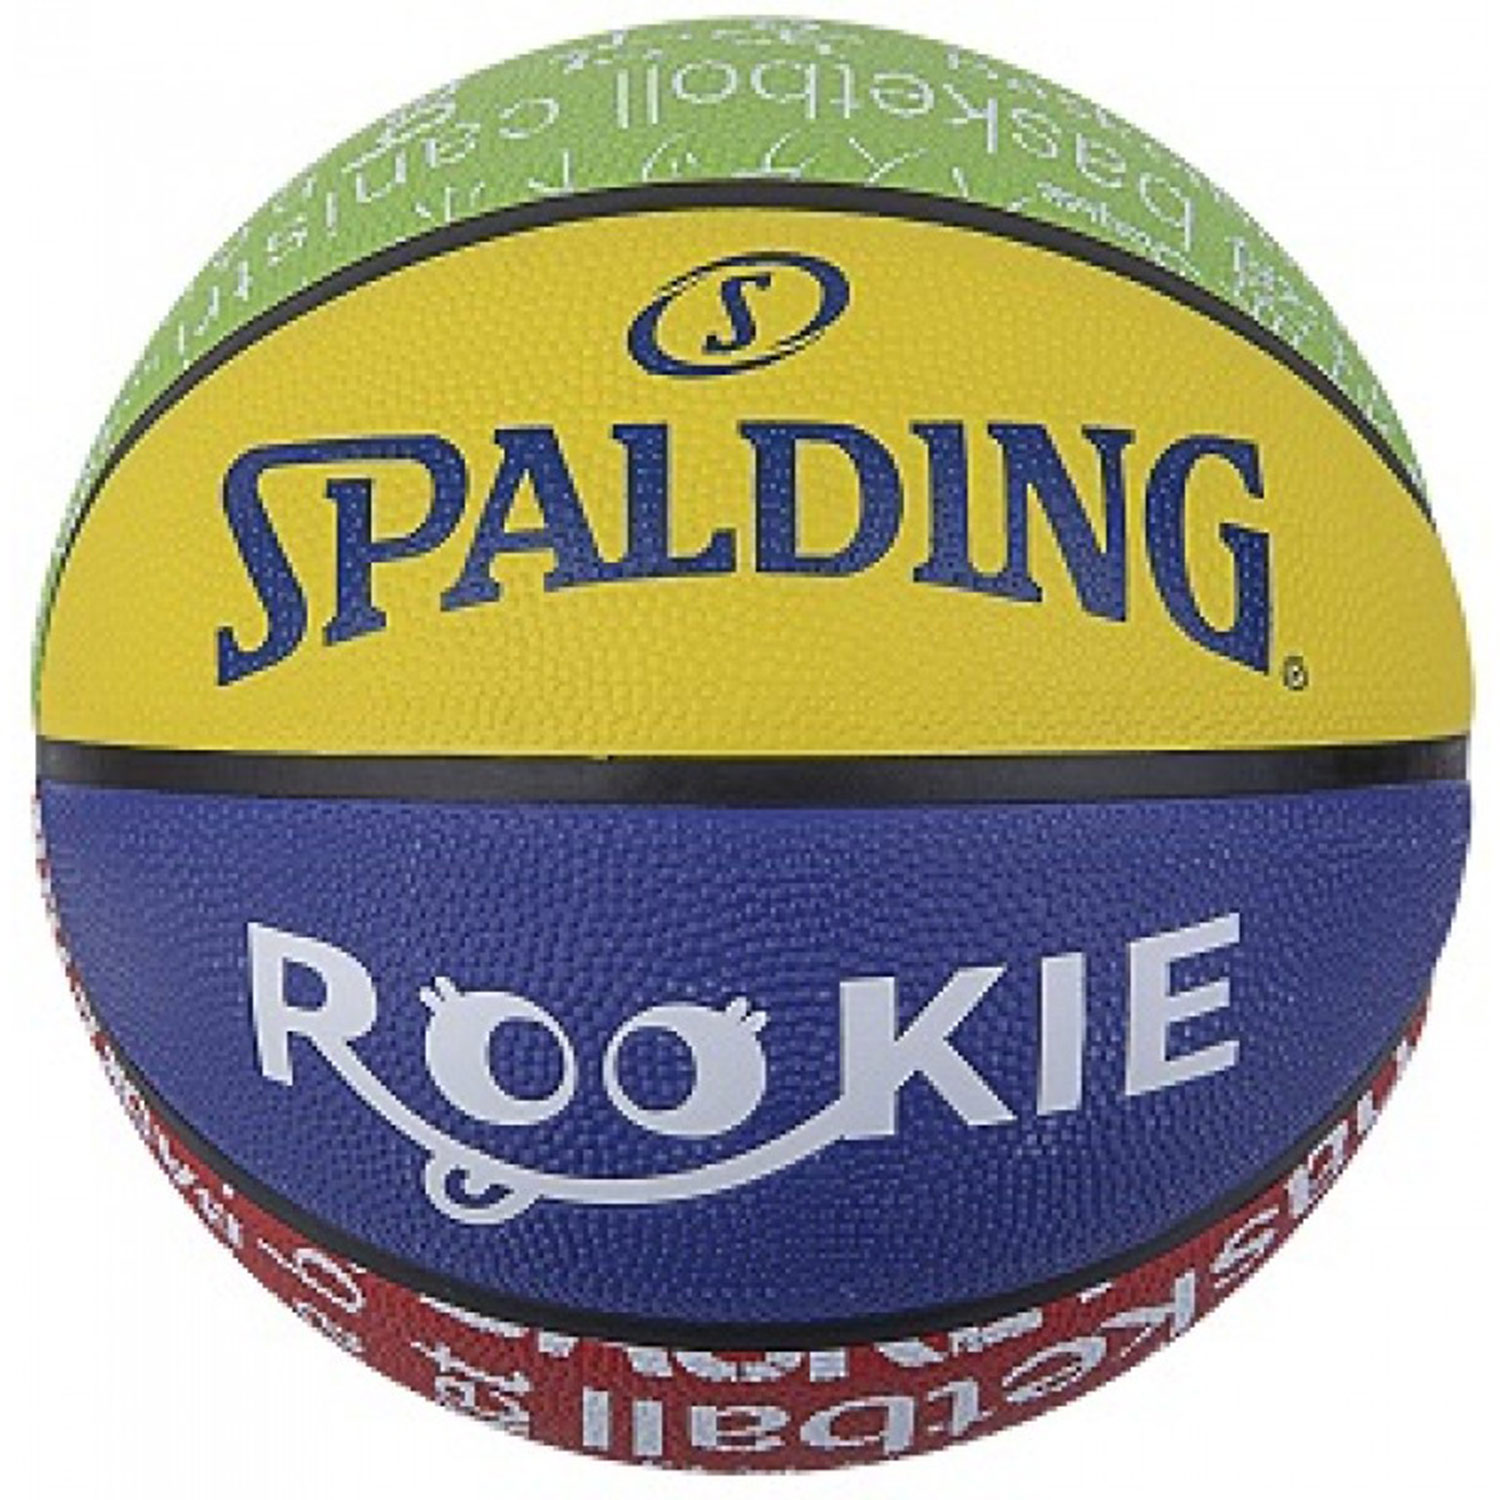 Baloncesto Spalding Rookie Talla 5 Junior